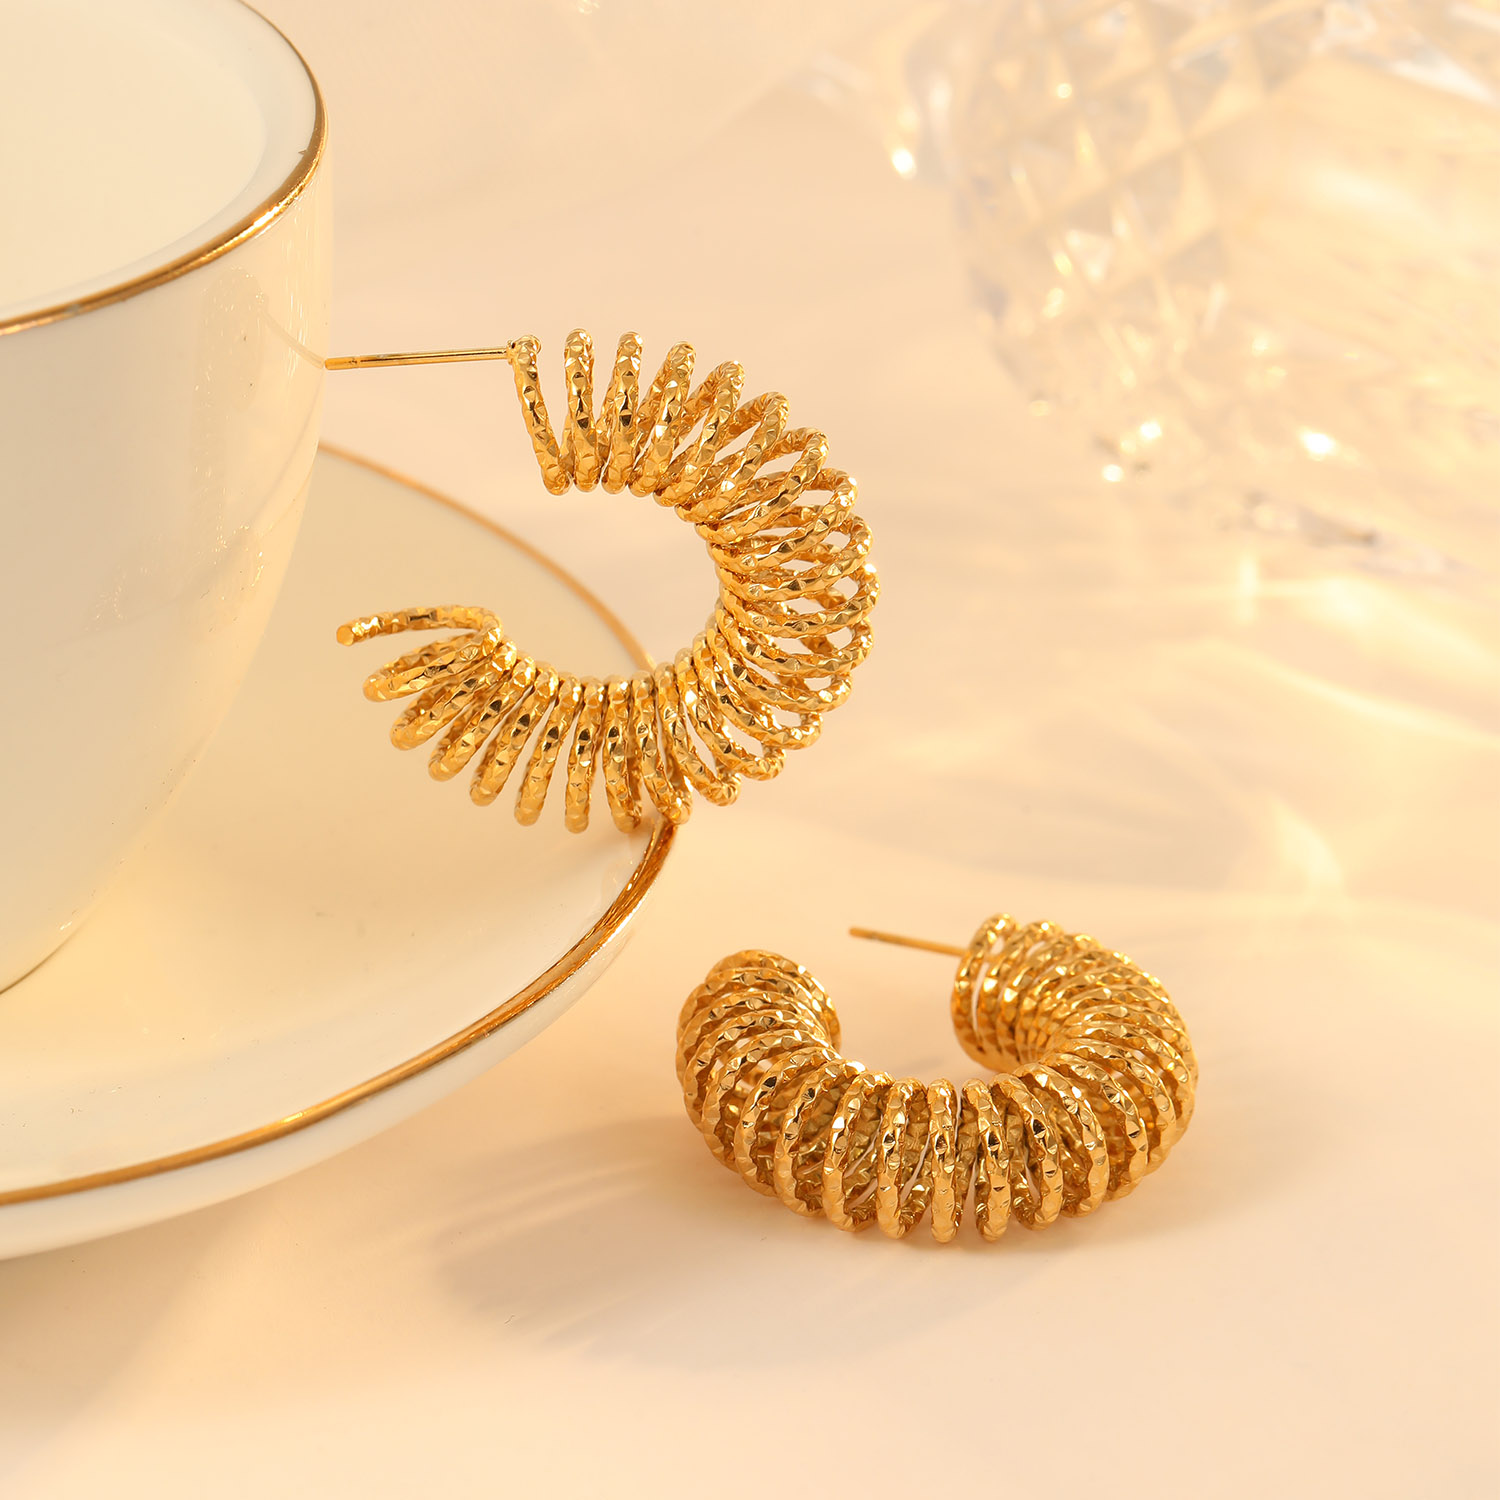 Custom Unique New 18K Gold-Plated Stainless Steel Spring Coil Women's Earrings